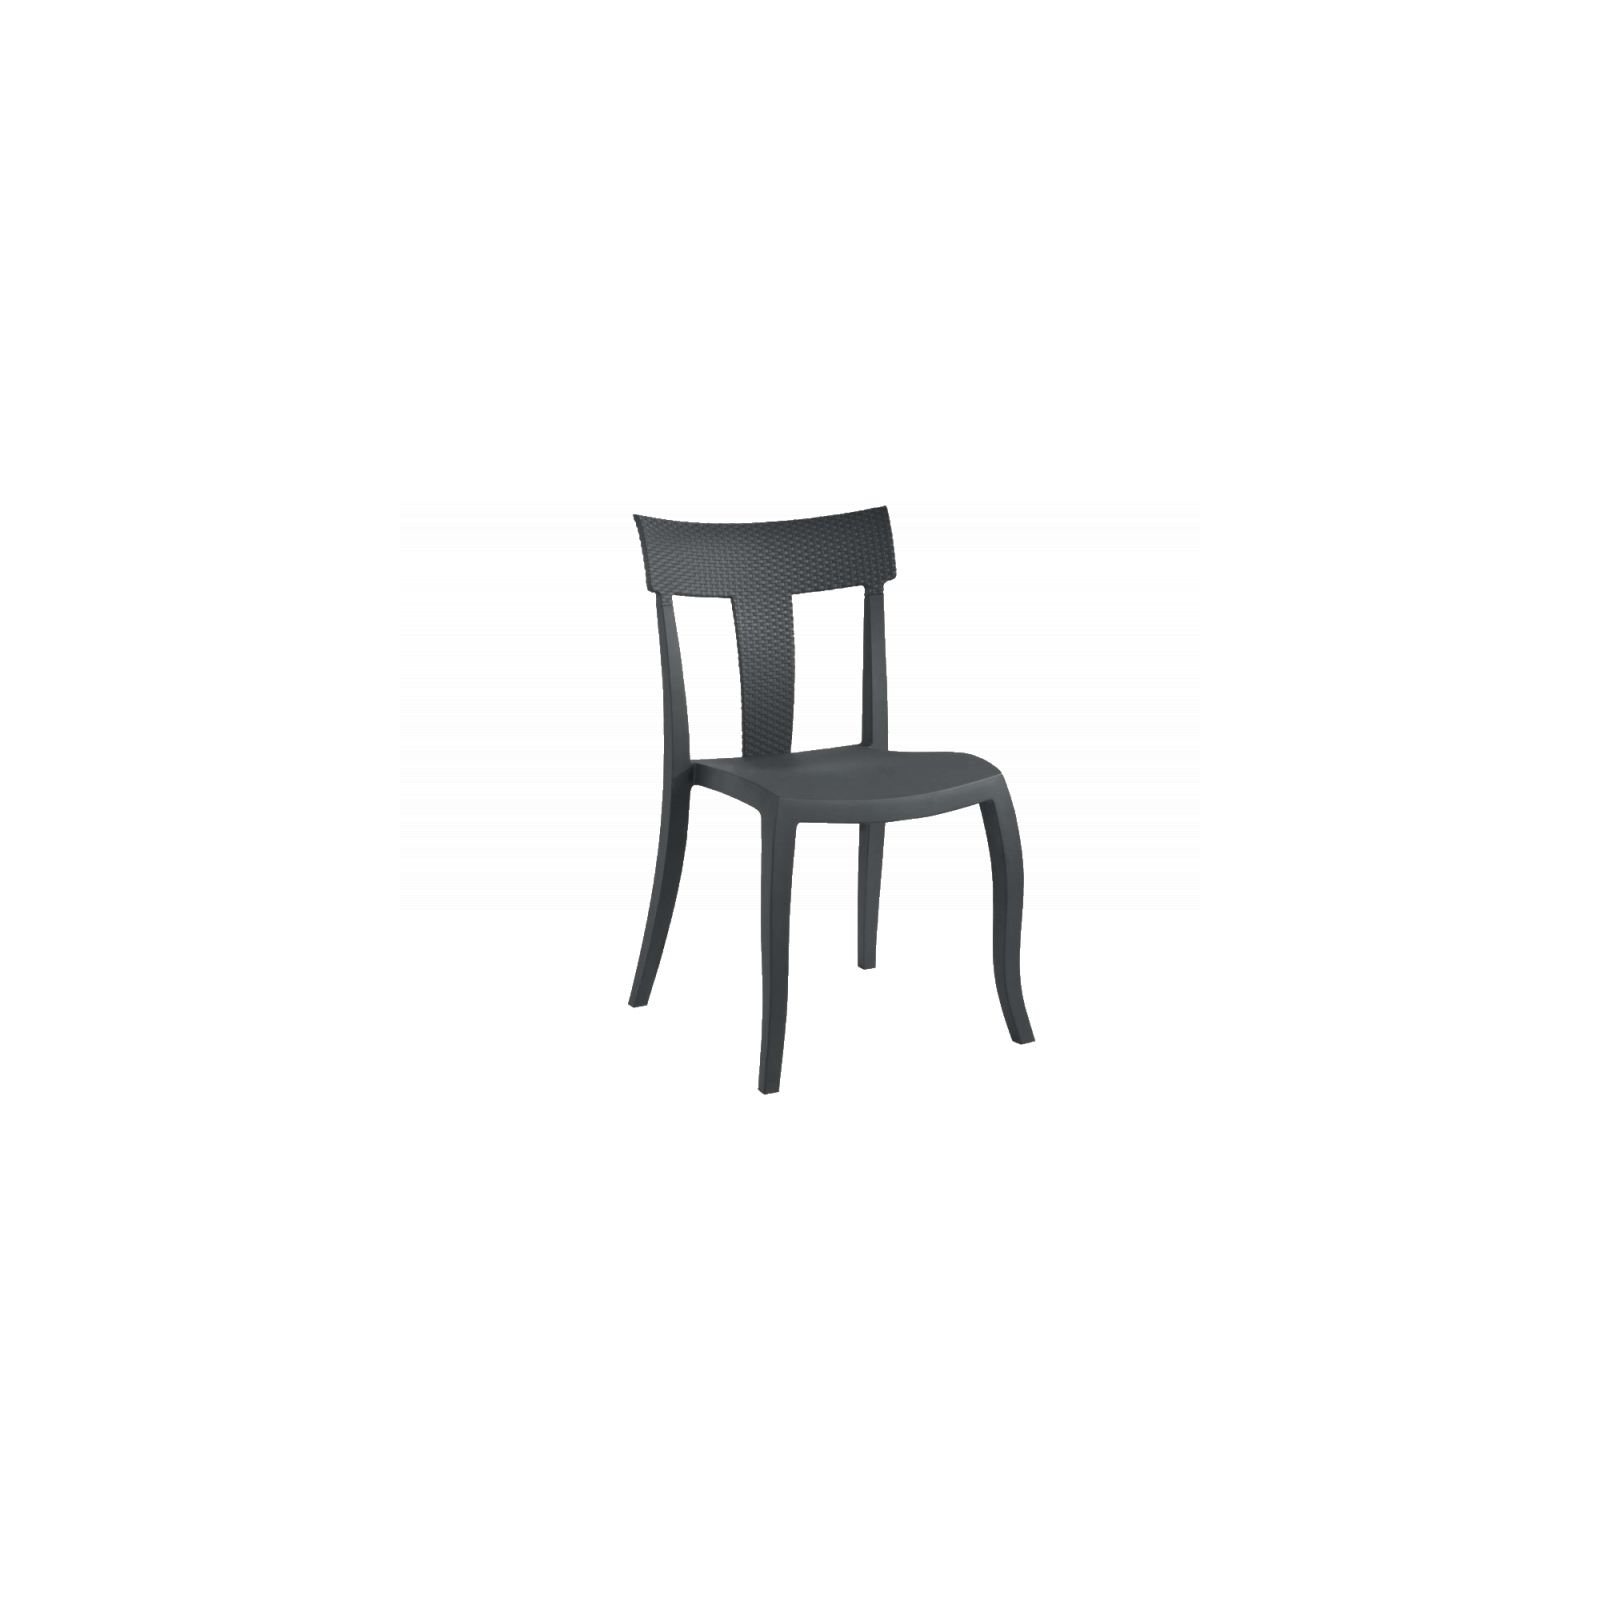 Кухонный стул PAPATYA toro-s под ротанг белый, цвет 01 (2192)